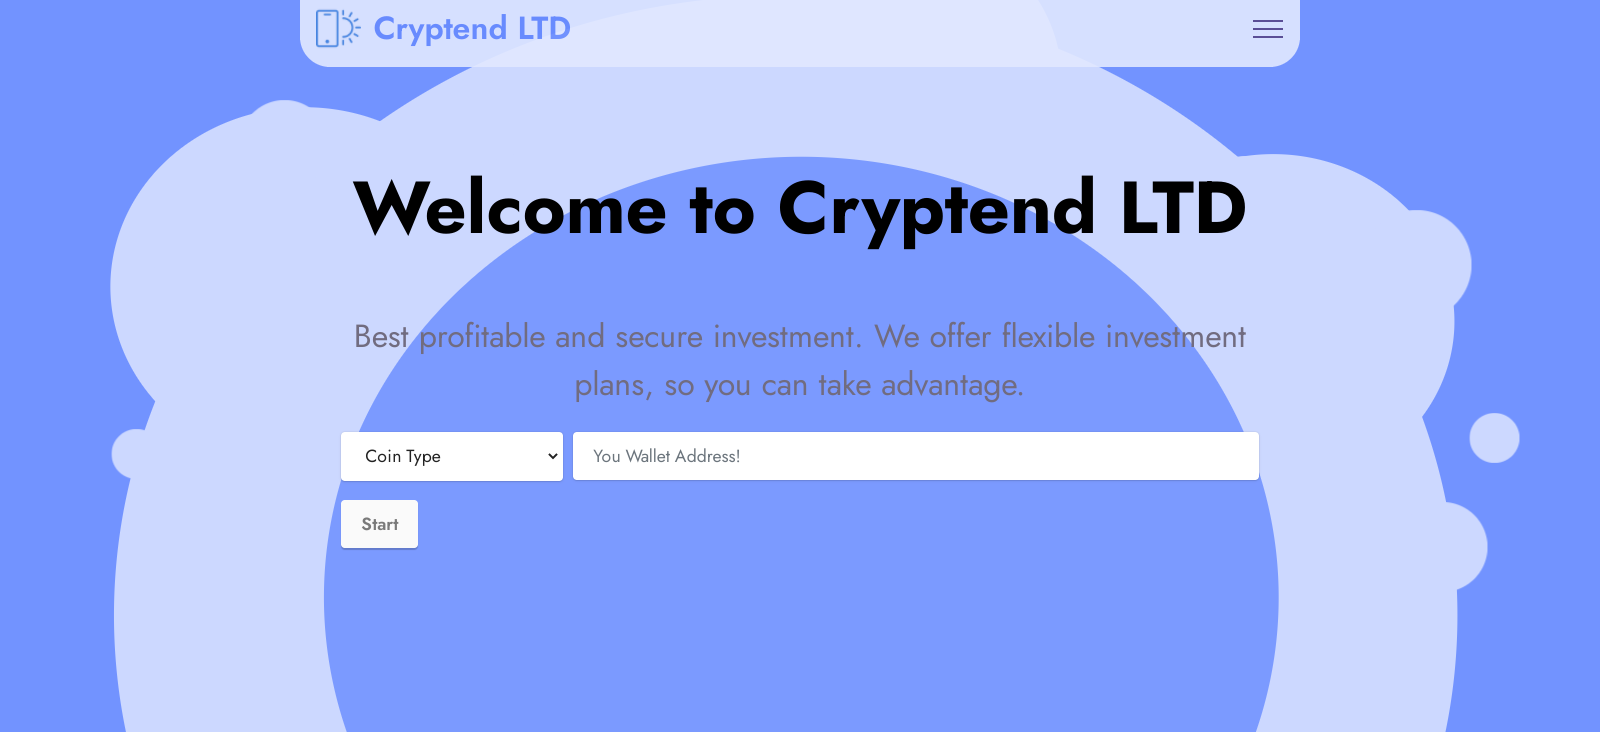 Cryptend.ltd Homepage Image